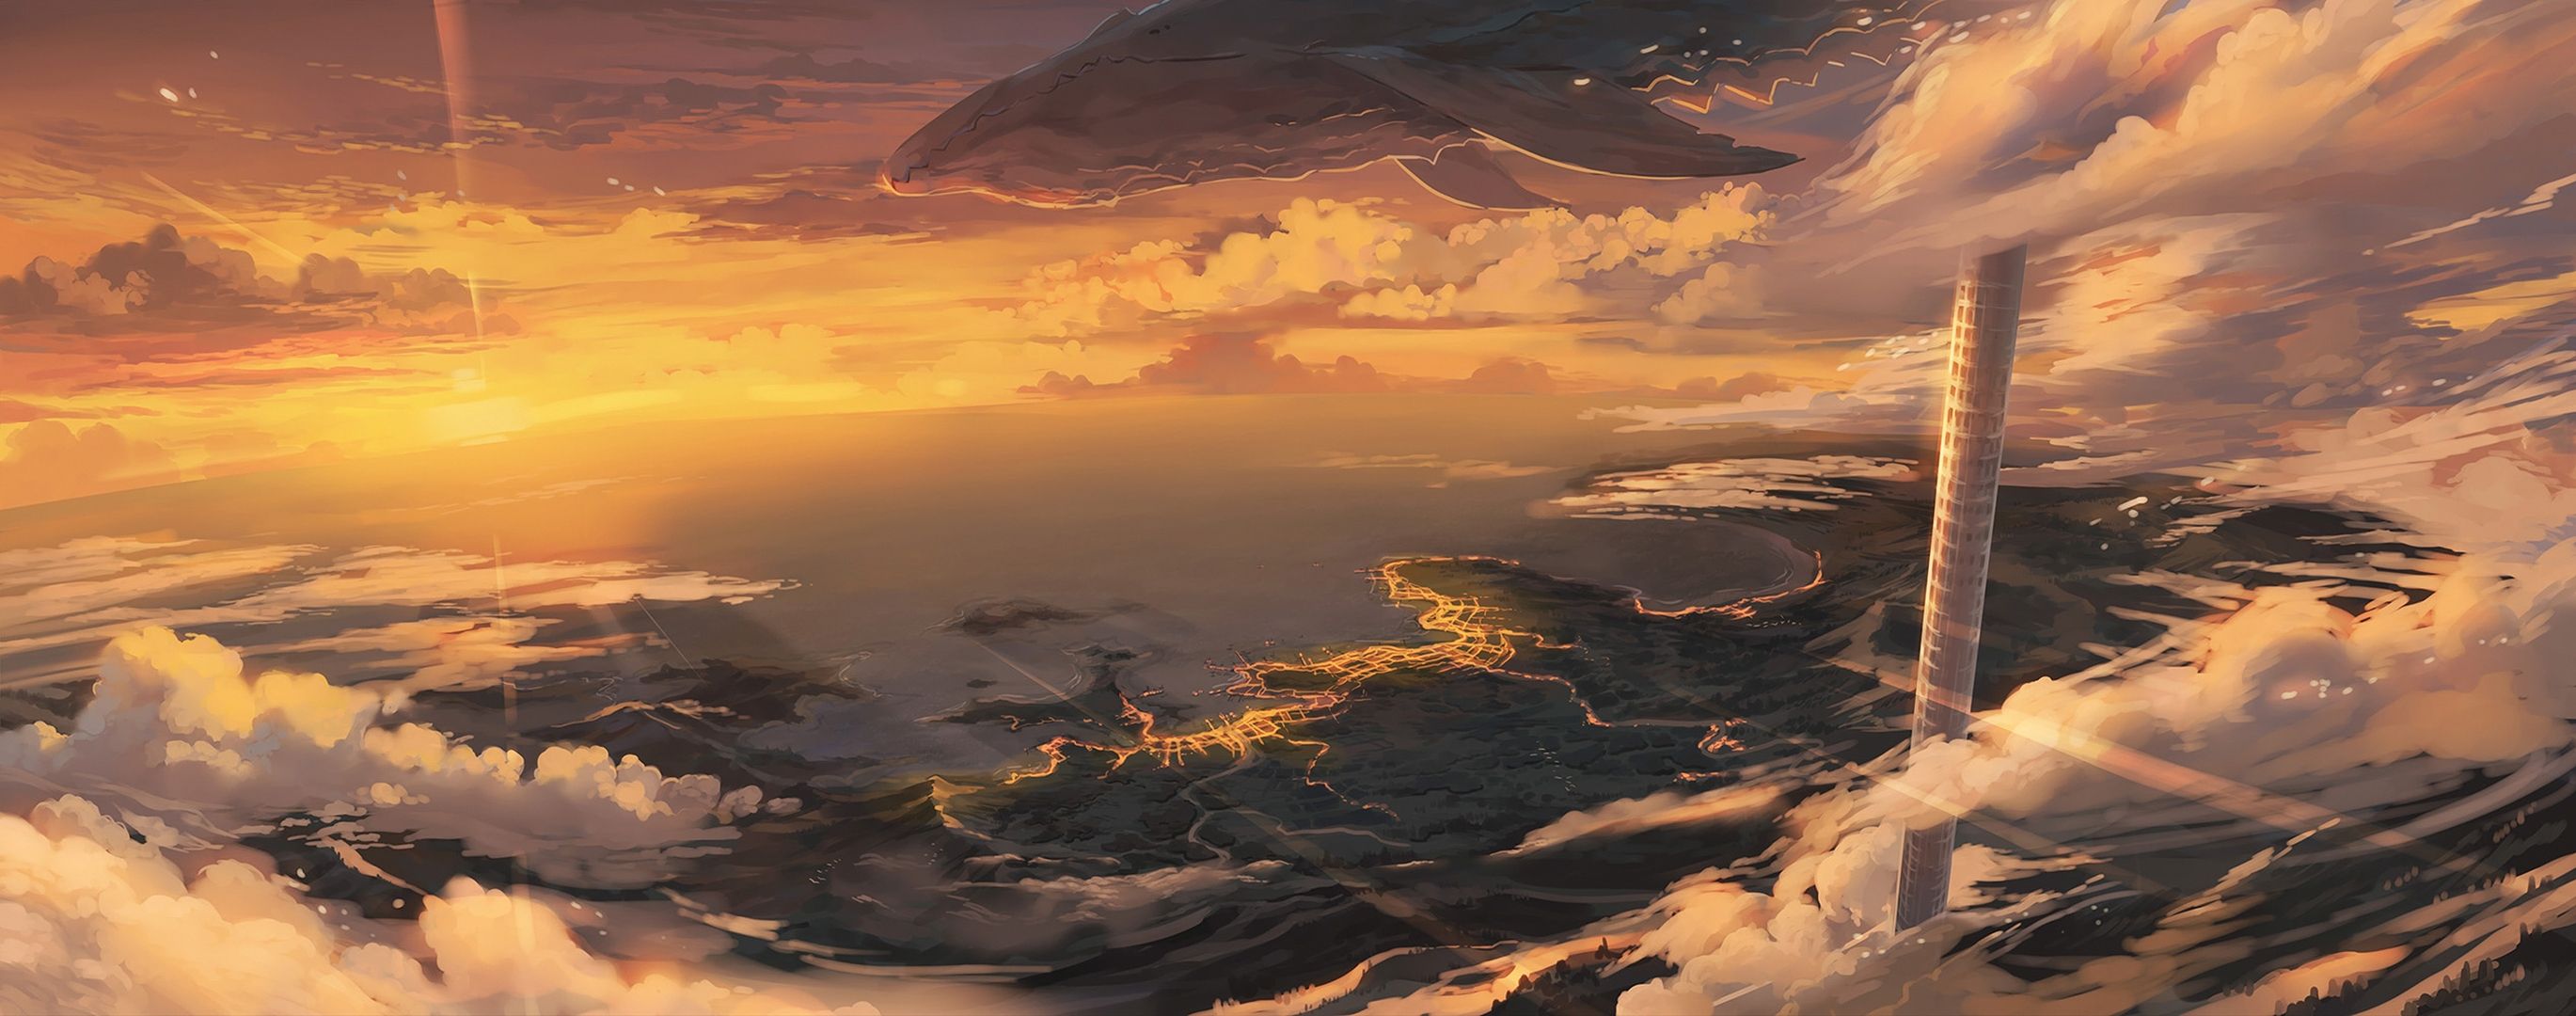 Download 2739x1080 Anime Landscape, Creature, Horizon, Sunset